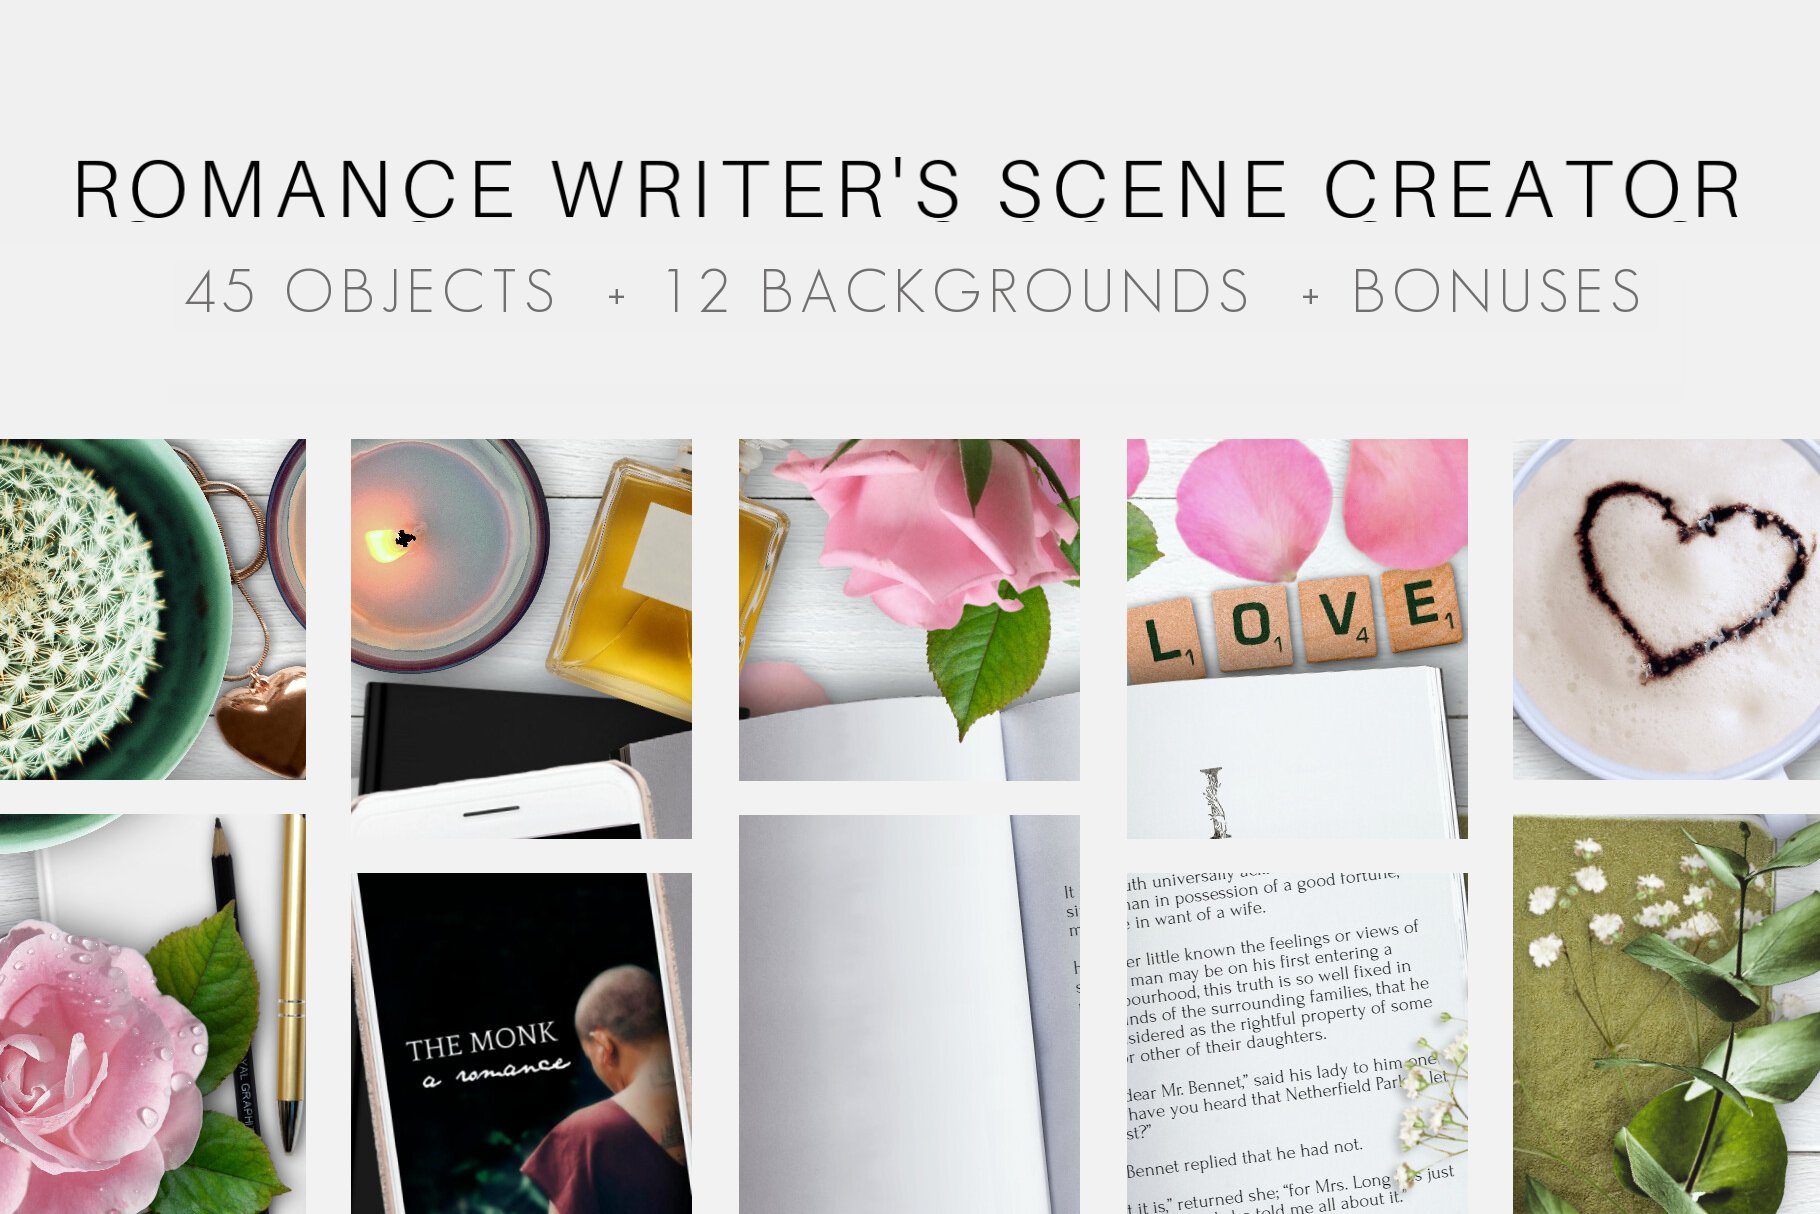 Romance Writer's Desk Scene Creator cover image.